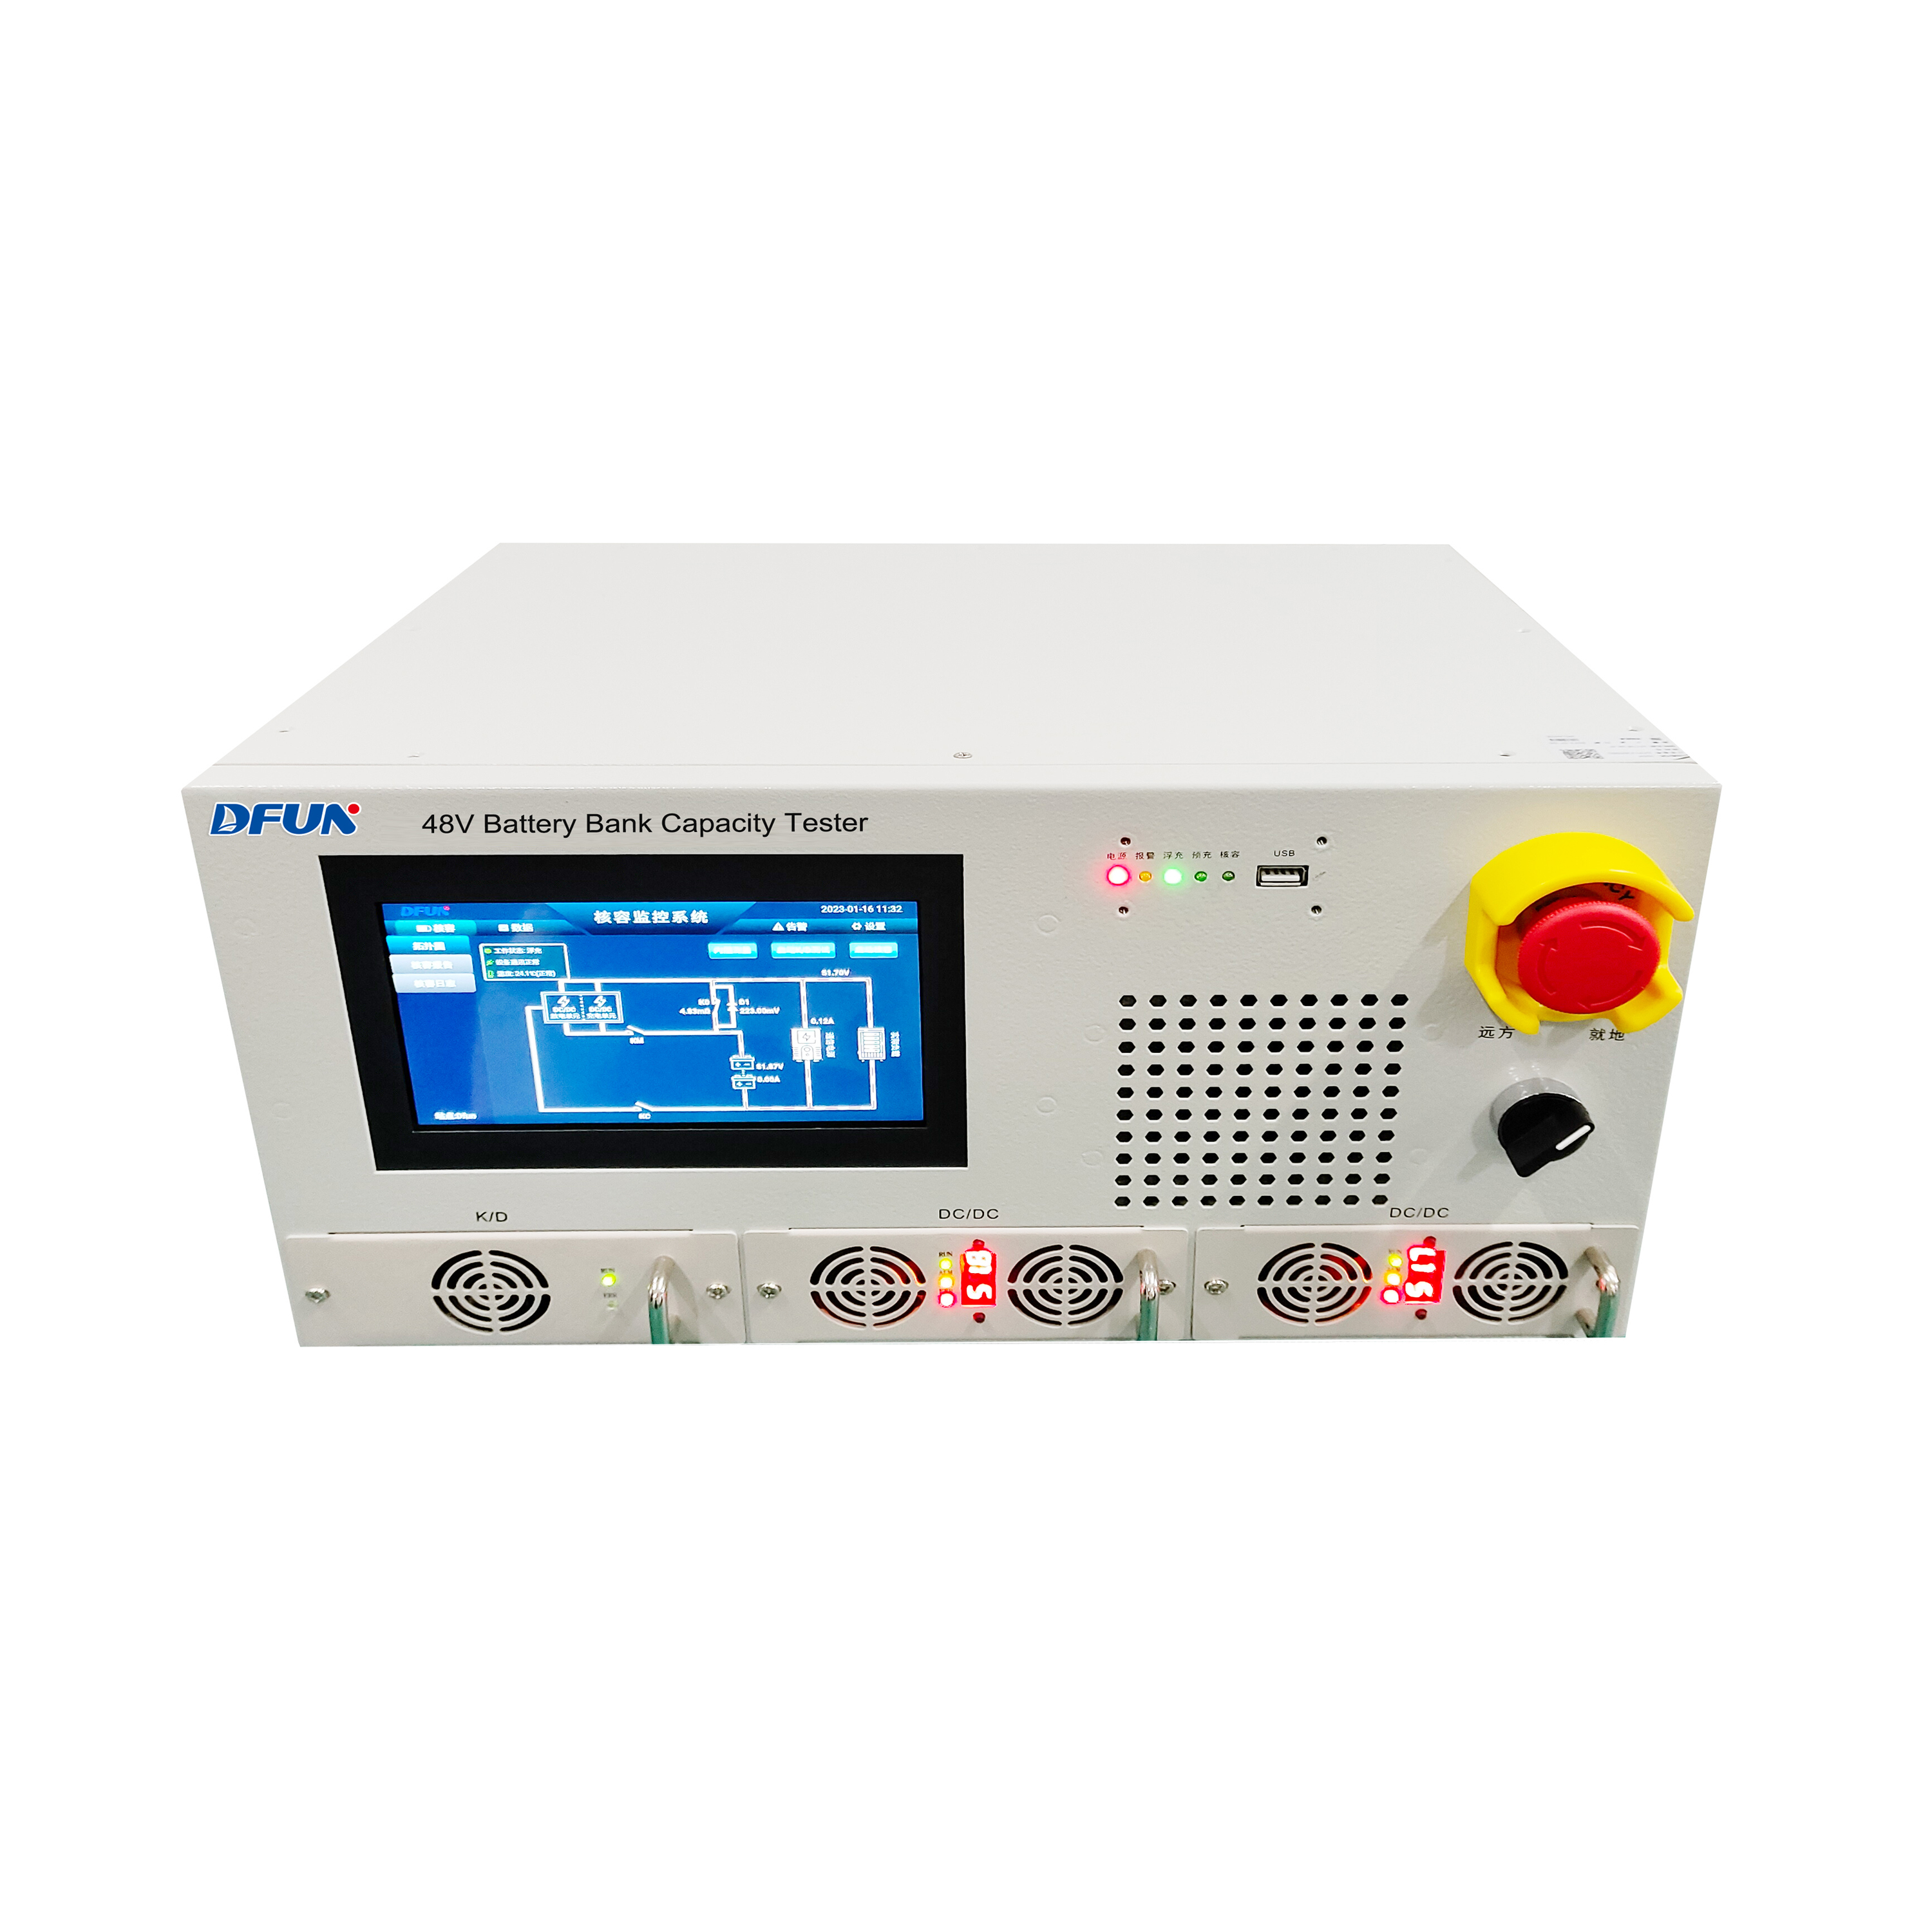 DFCT48 48V Battery Bank Capacity Tester